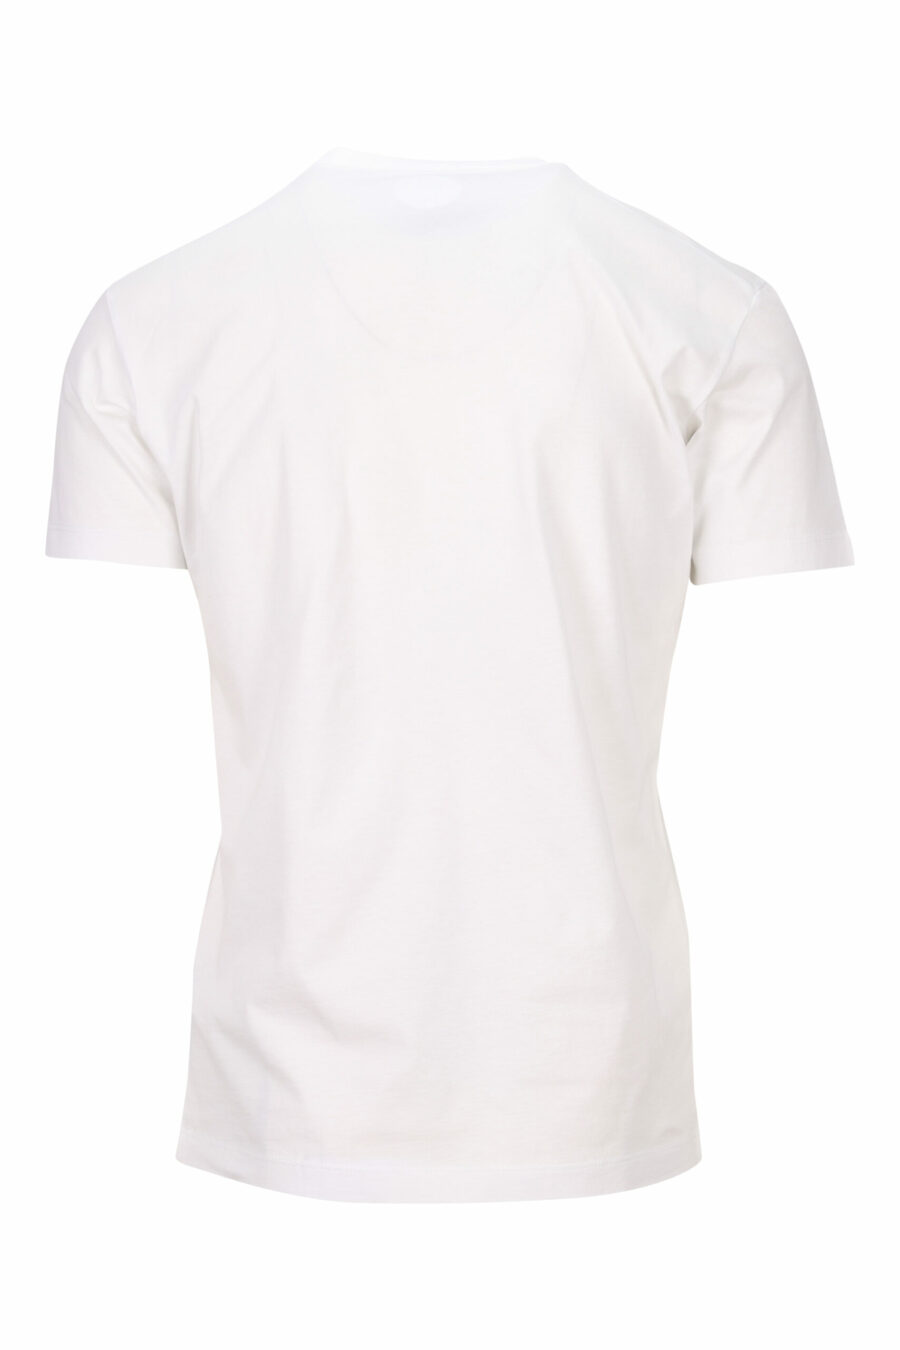 Camiseta blanca con maxilogo "icon" verde neon borroso - 8054148358914 1 scaled